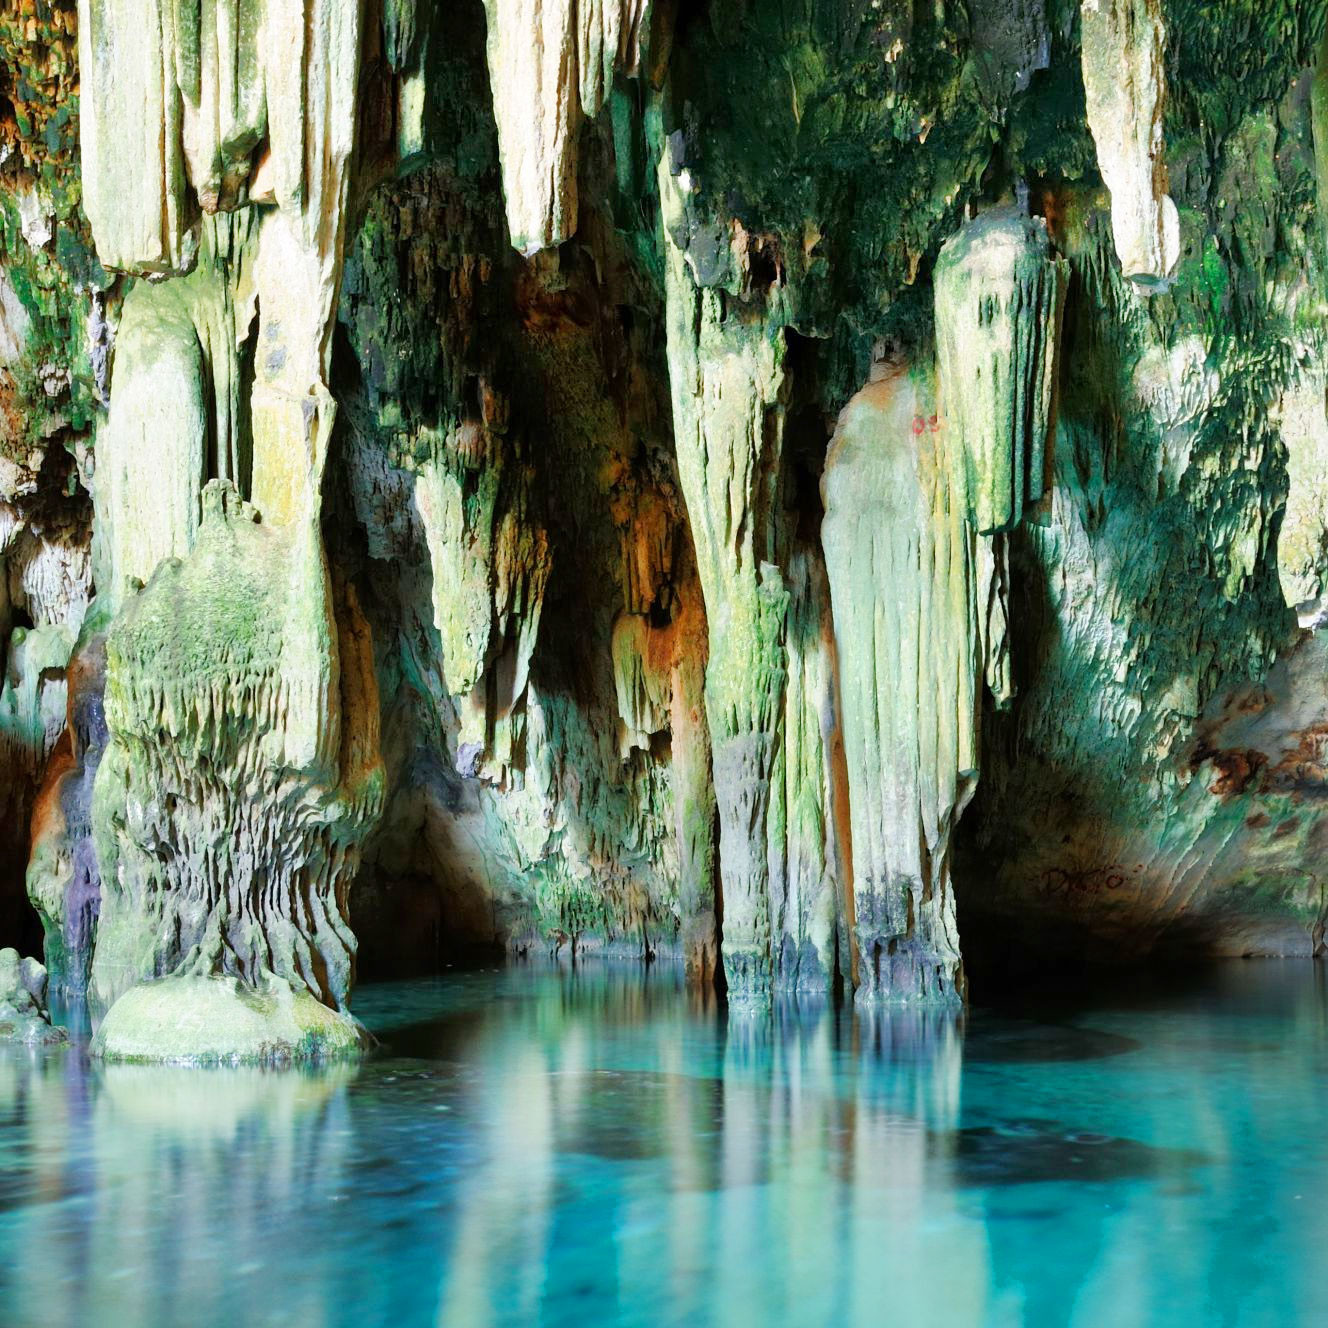 Belize cenotes central america travel guide